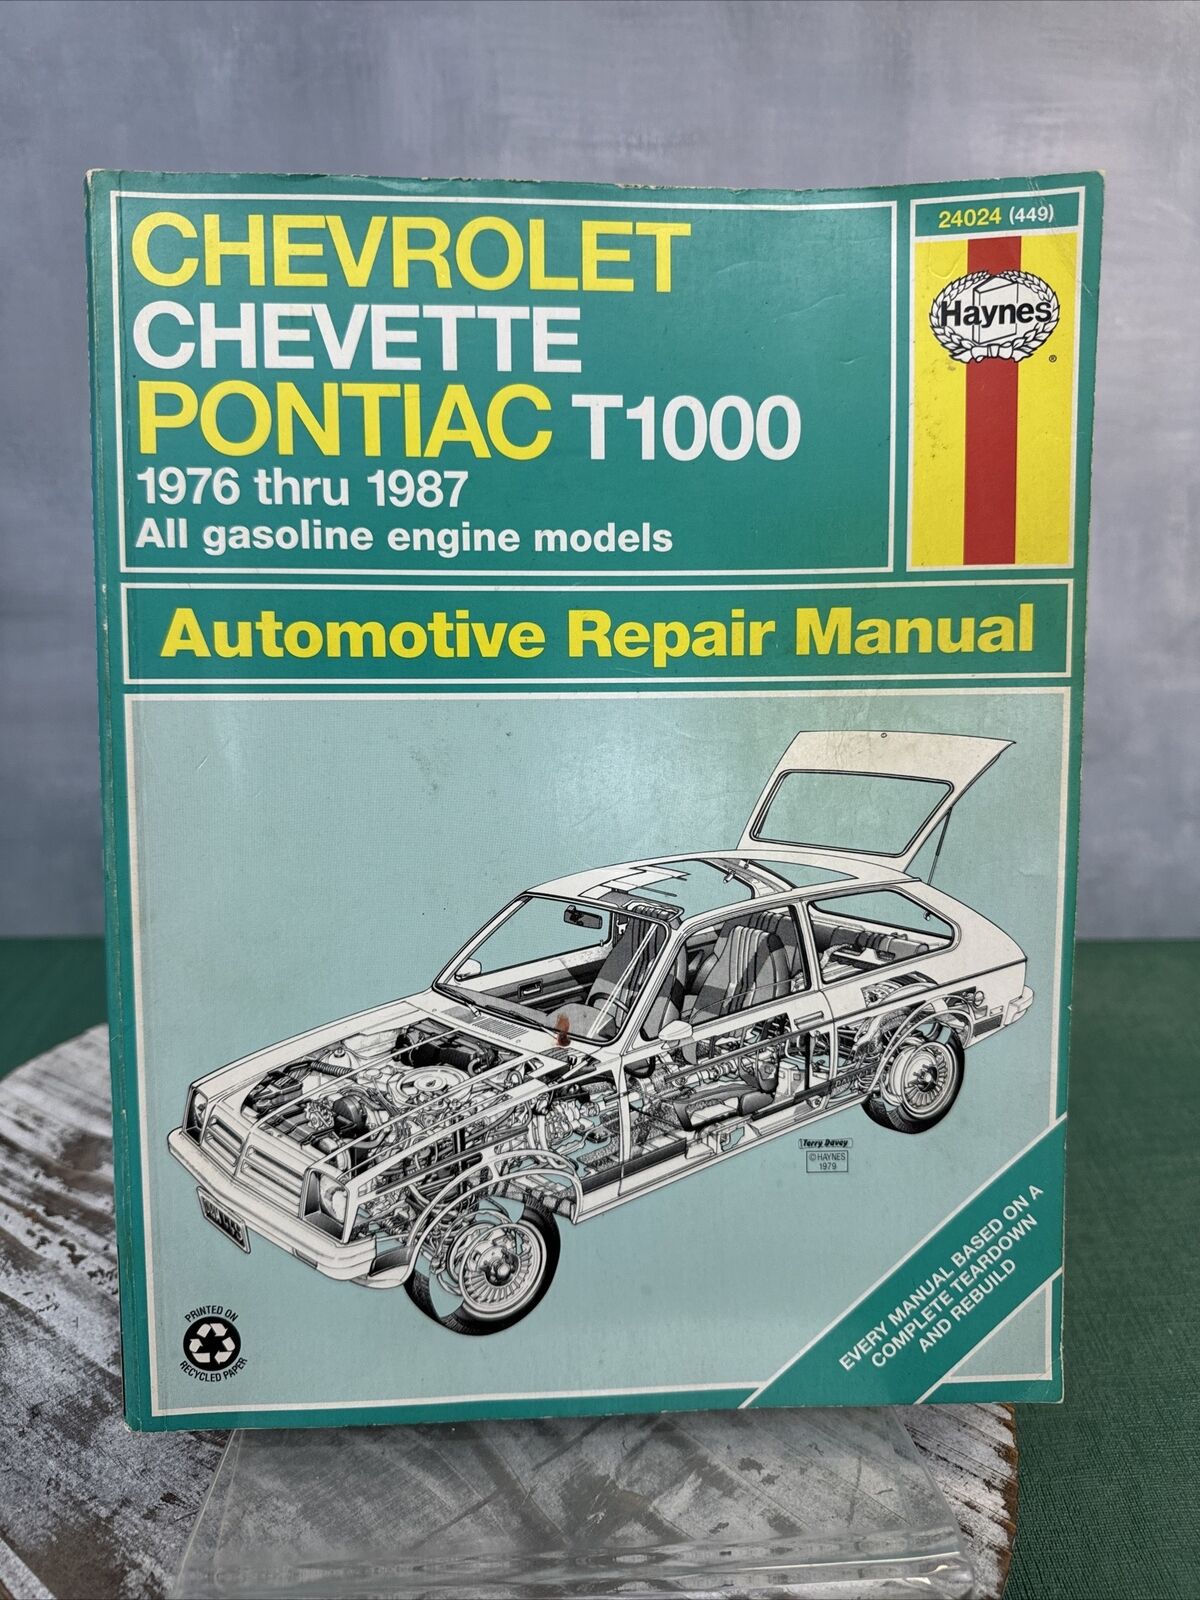 1976 - 1987 Chevrolet Chevette Pontiac T1000 Haynes Auto Repair Manual